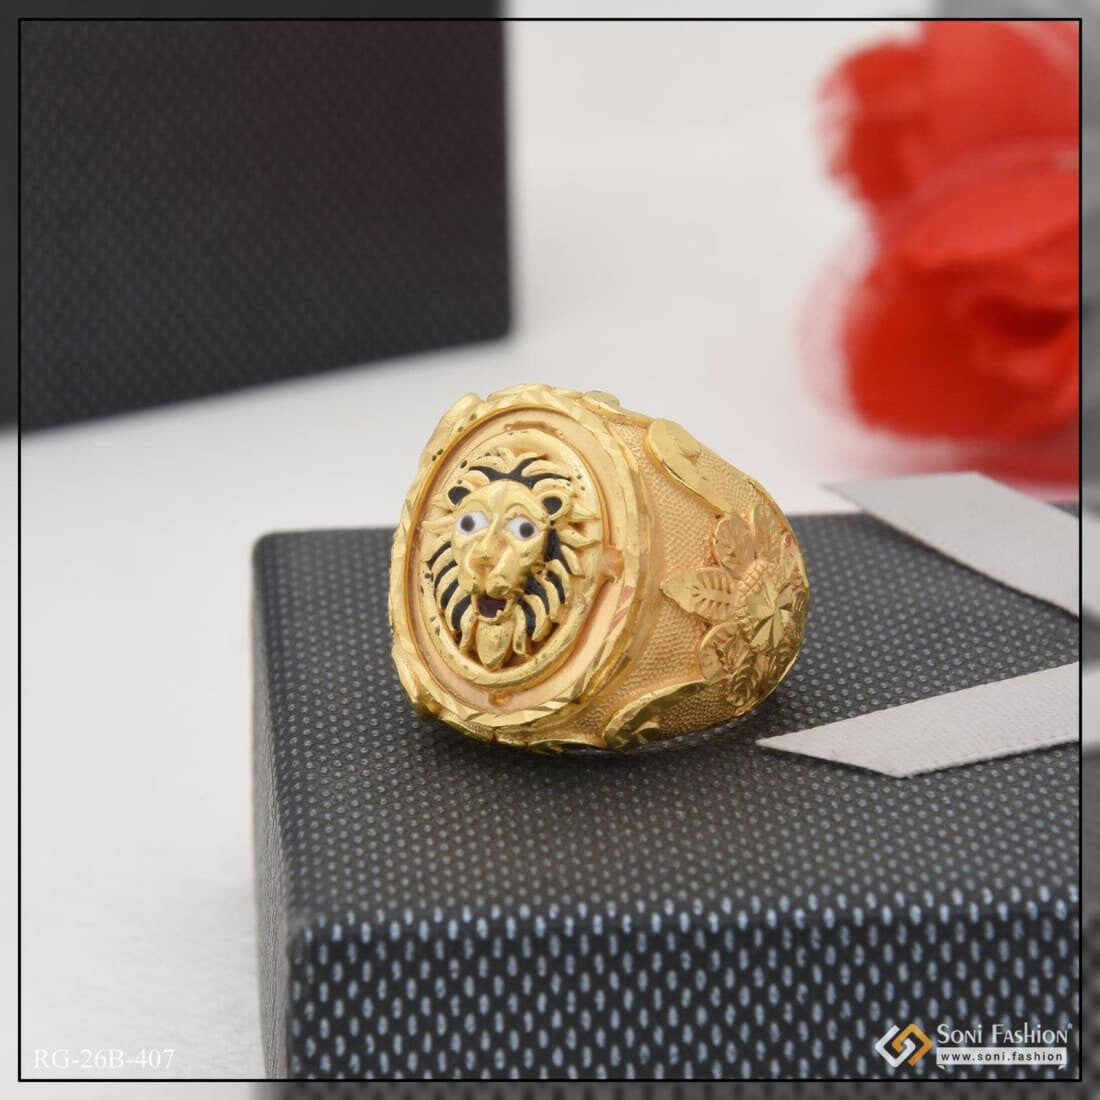 Buy 22K Gold Casting Lion Ring 97VL6230 Online from Vaibhav Jewellers